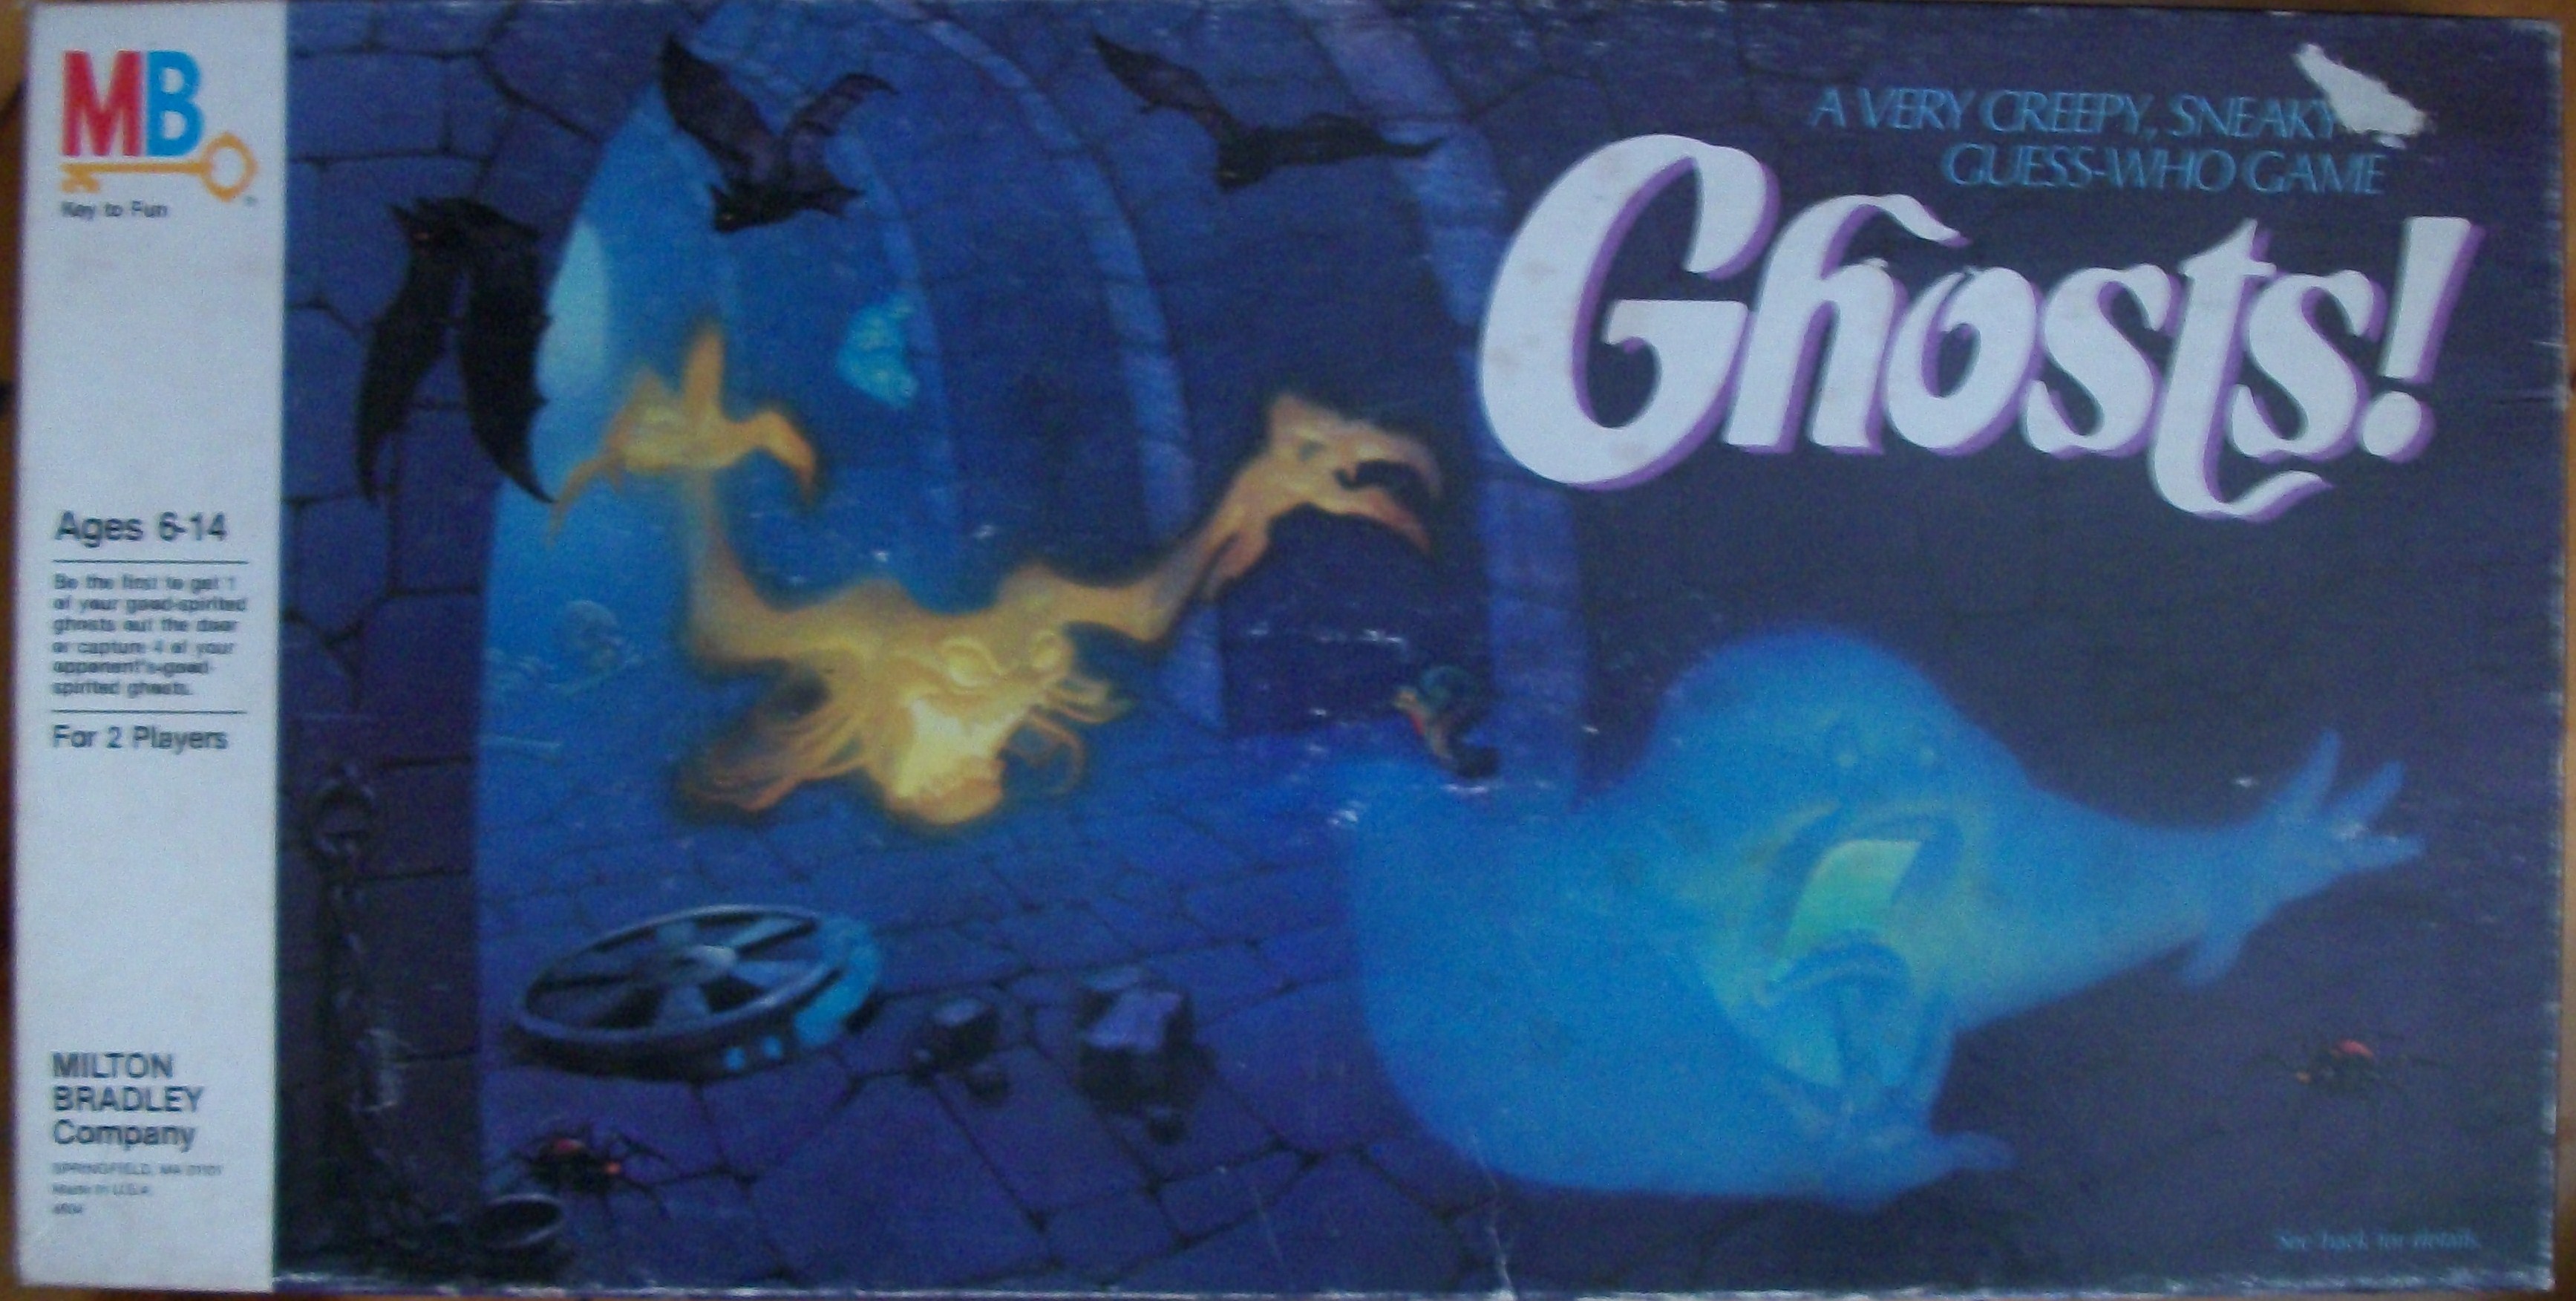 1985 Milton Bradley Game of Ghosts!